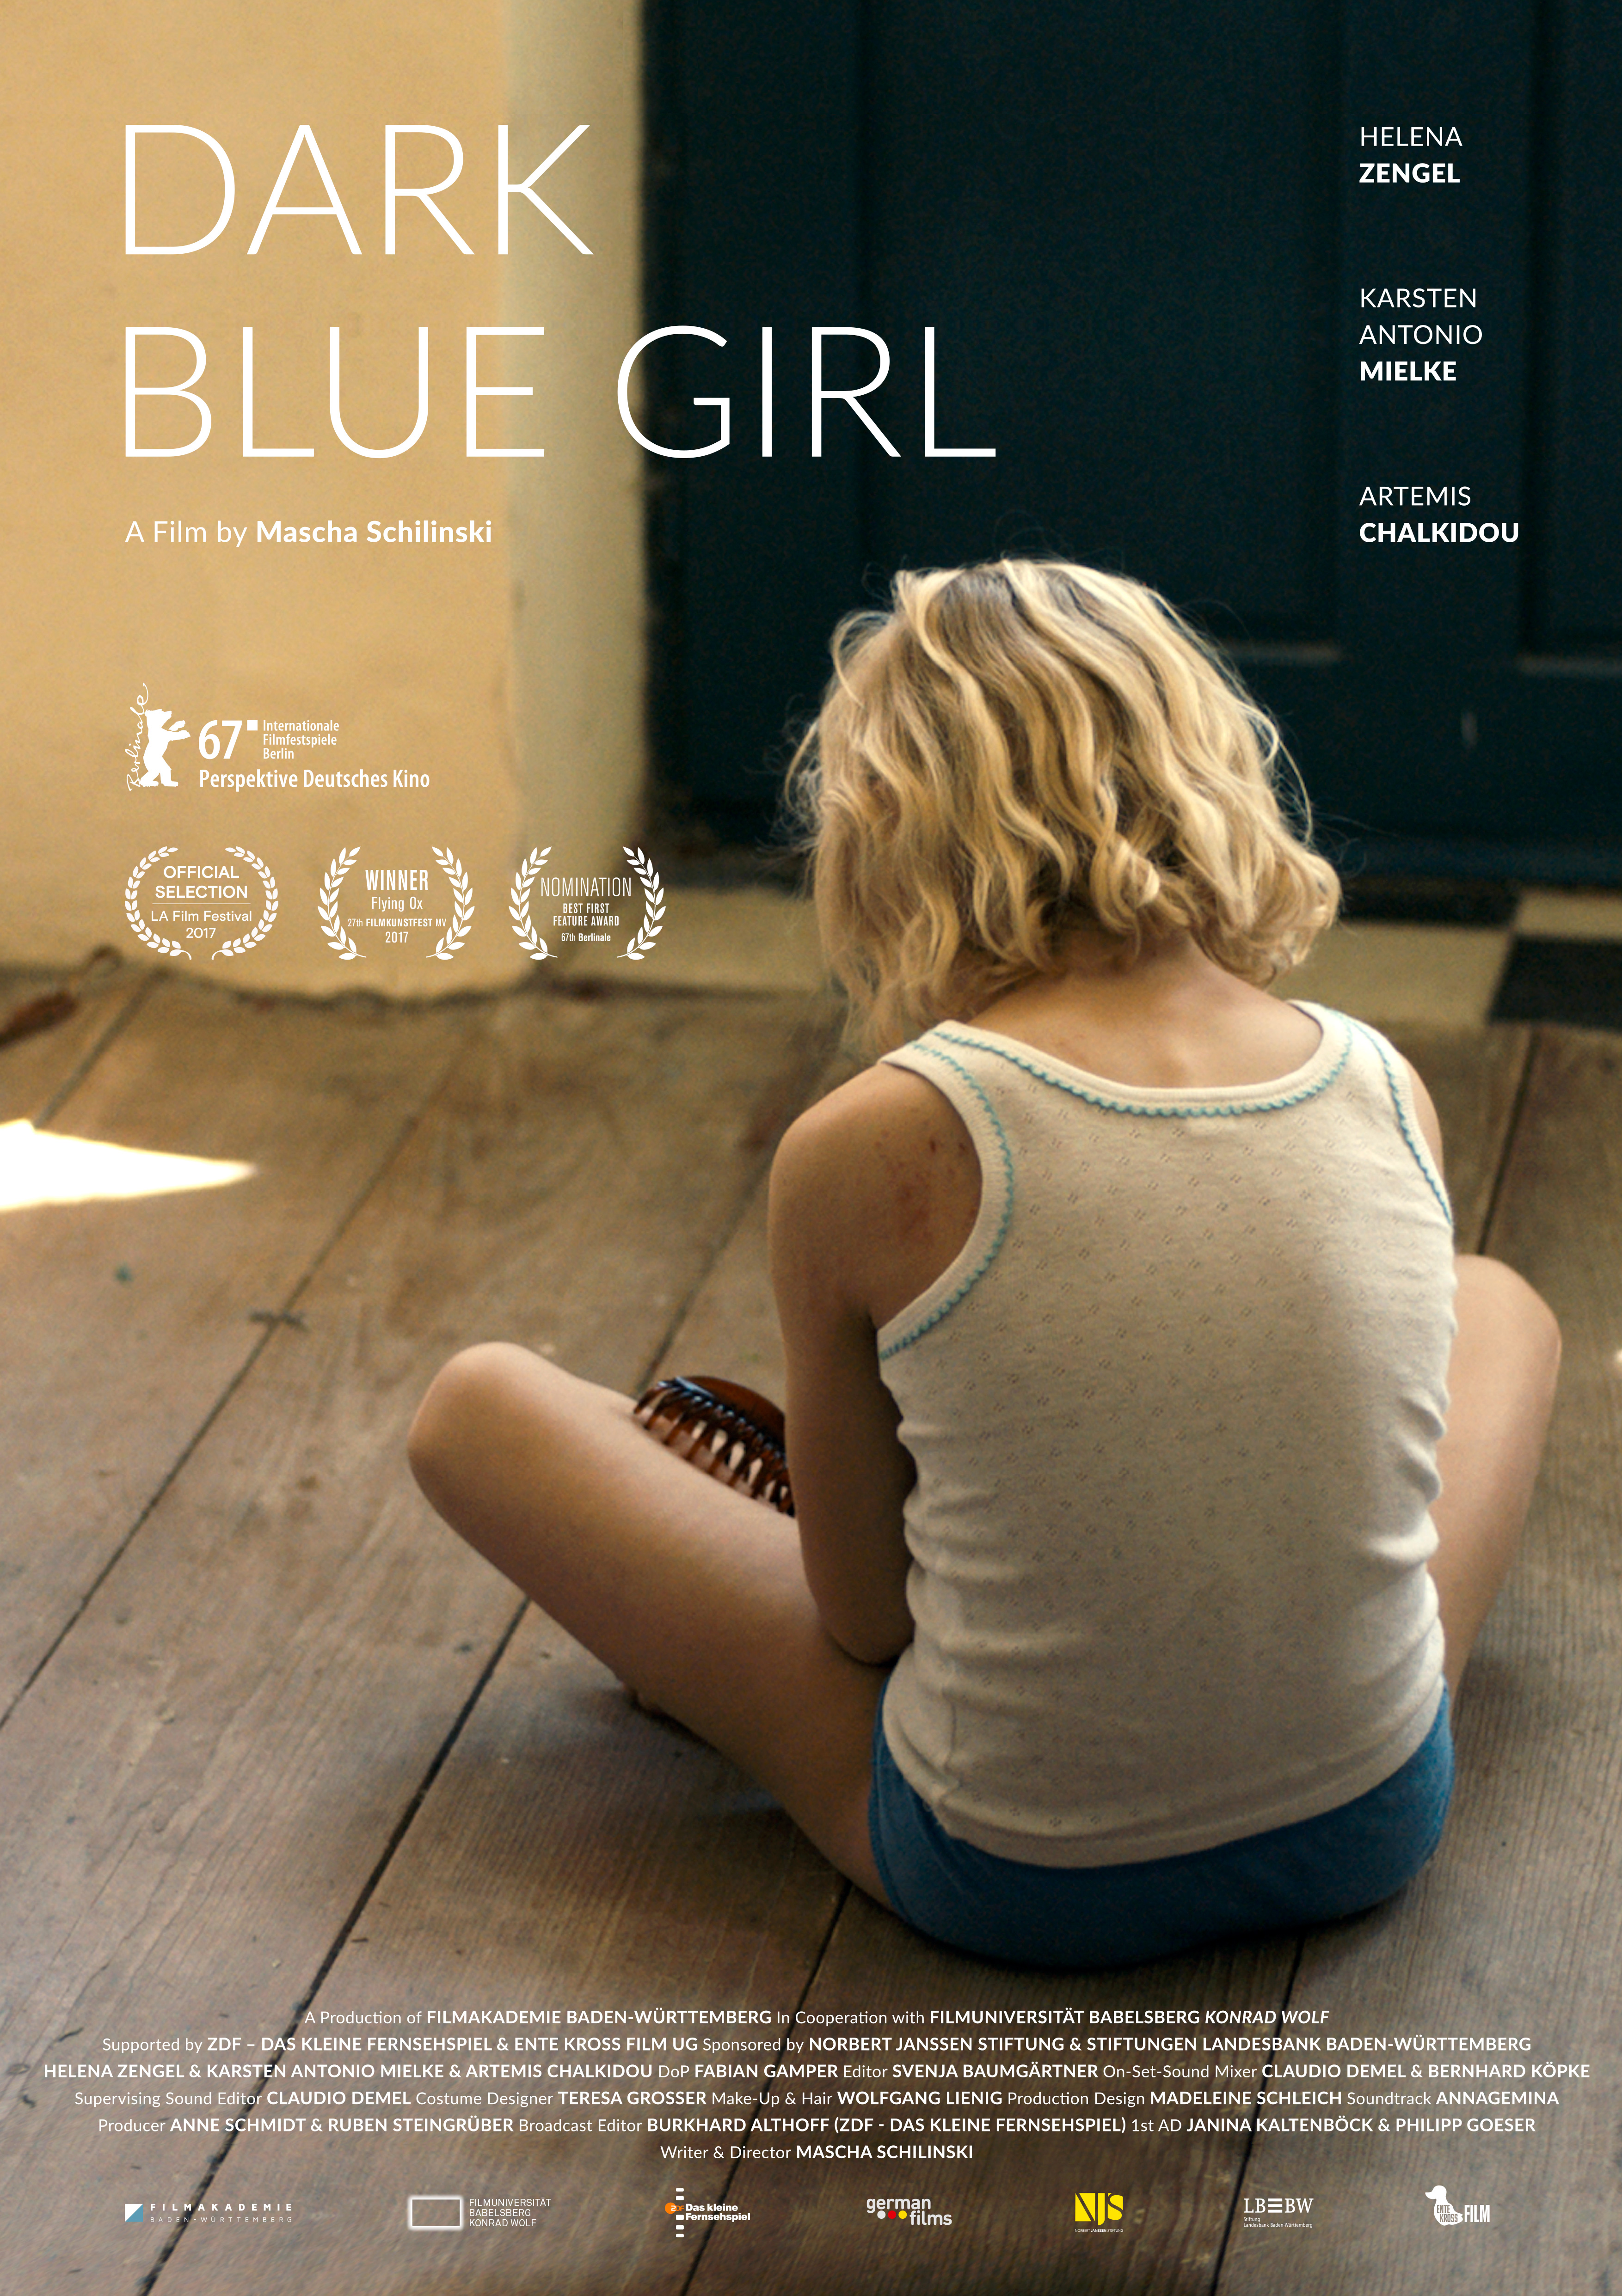 aslam ikramzai recommends black girls blue film pic